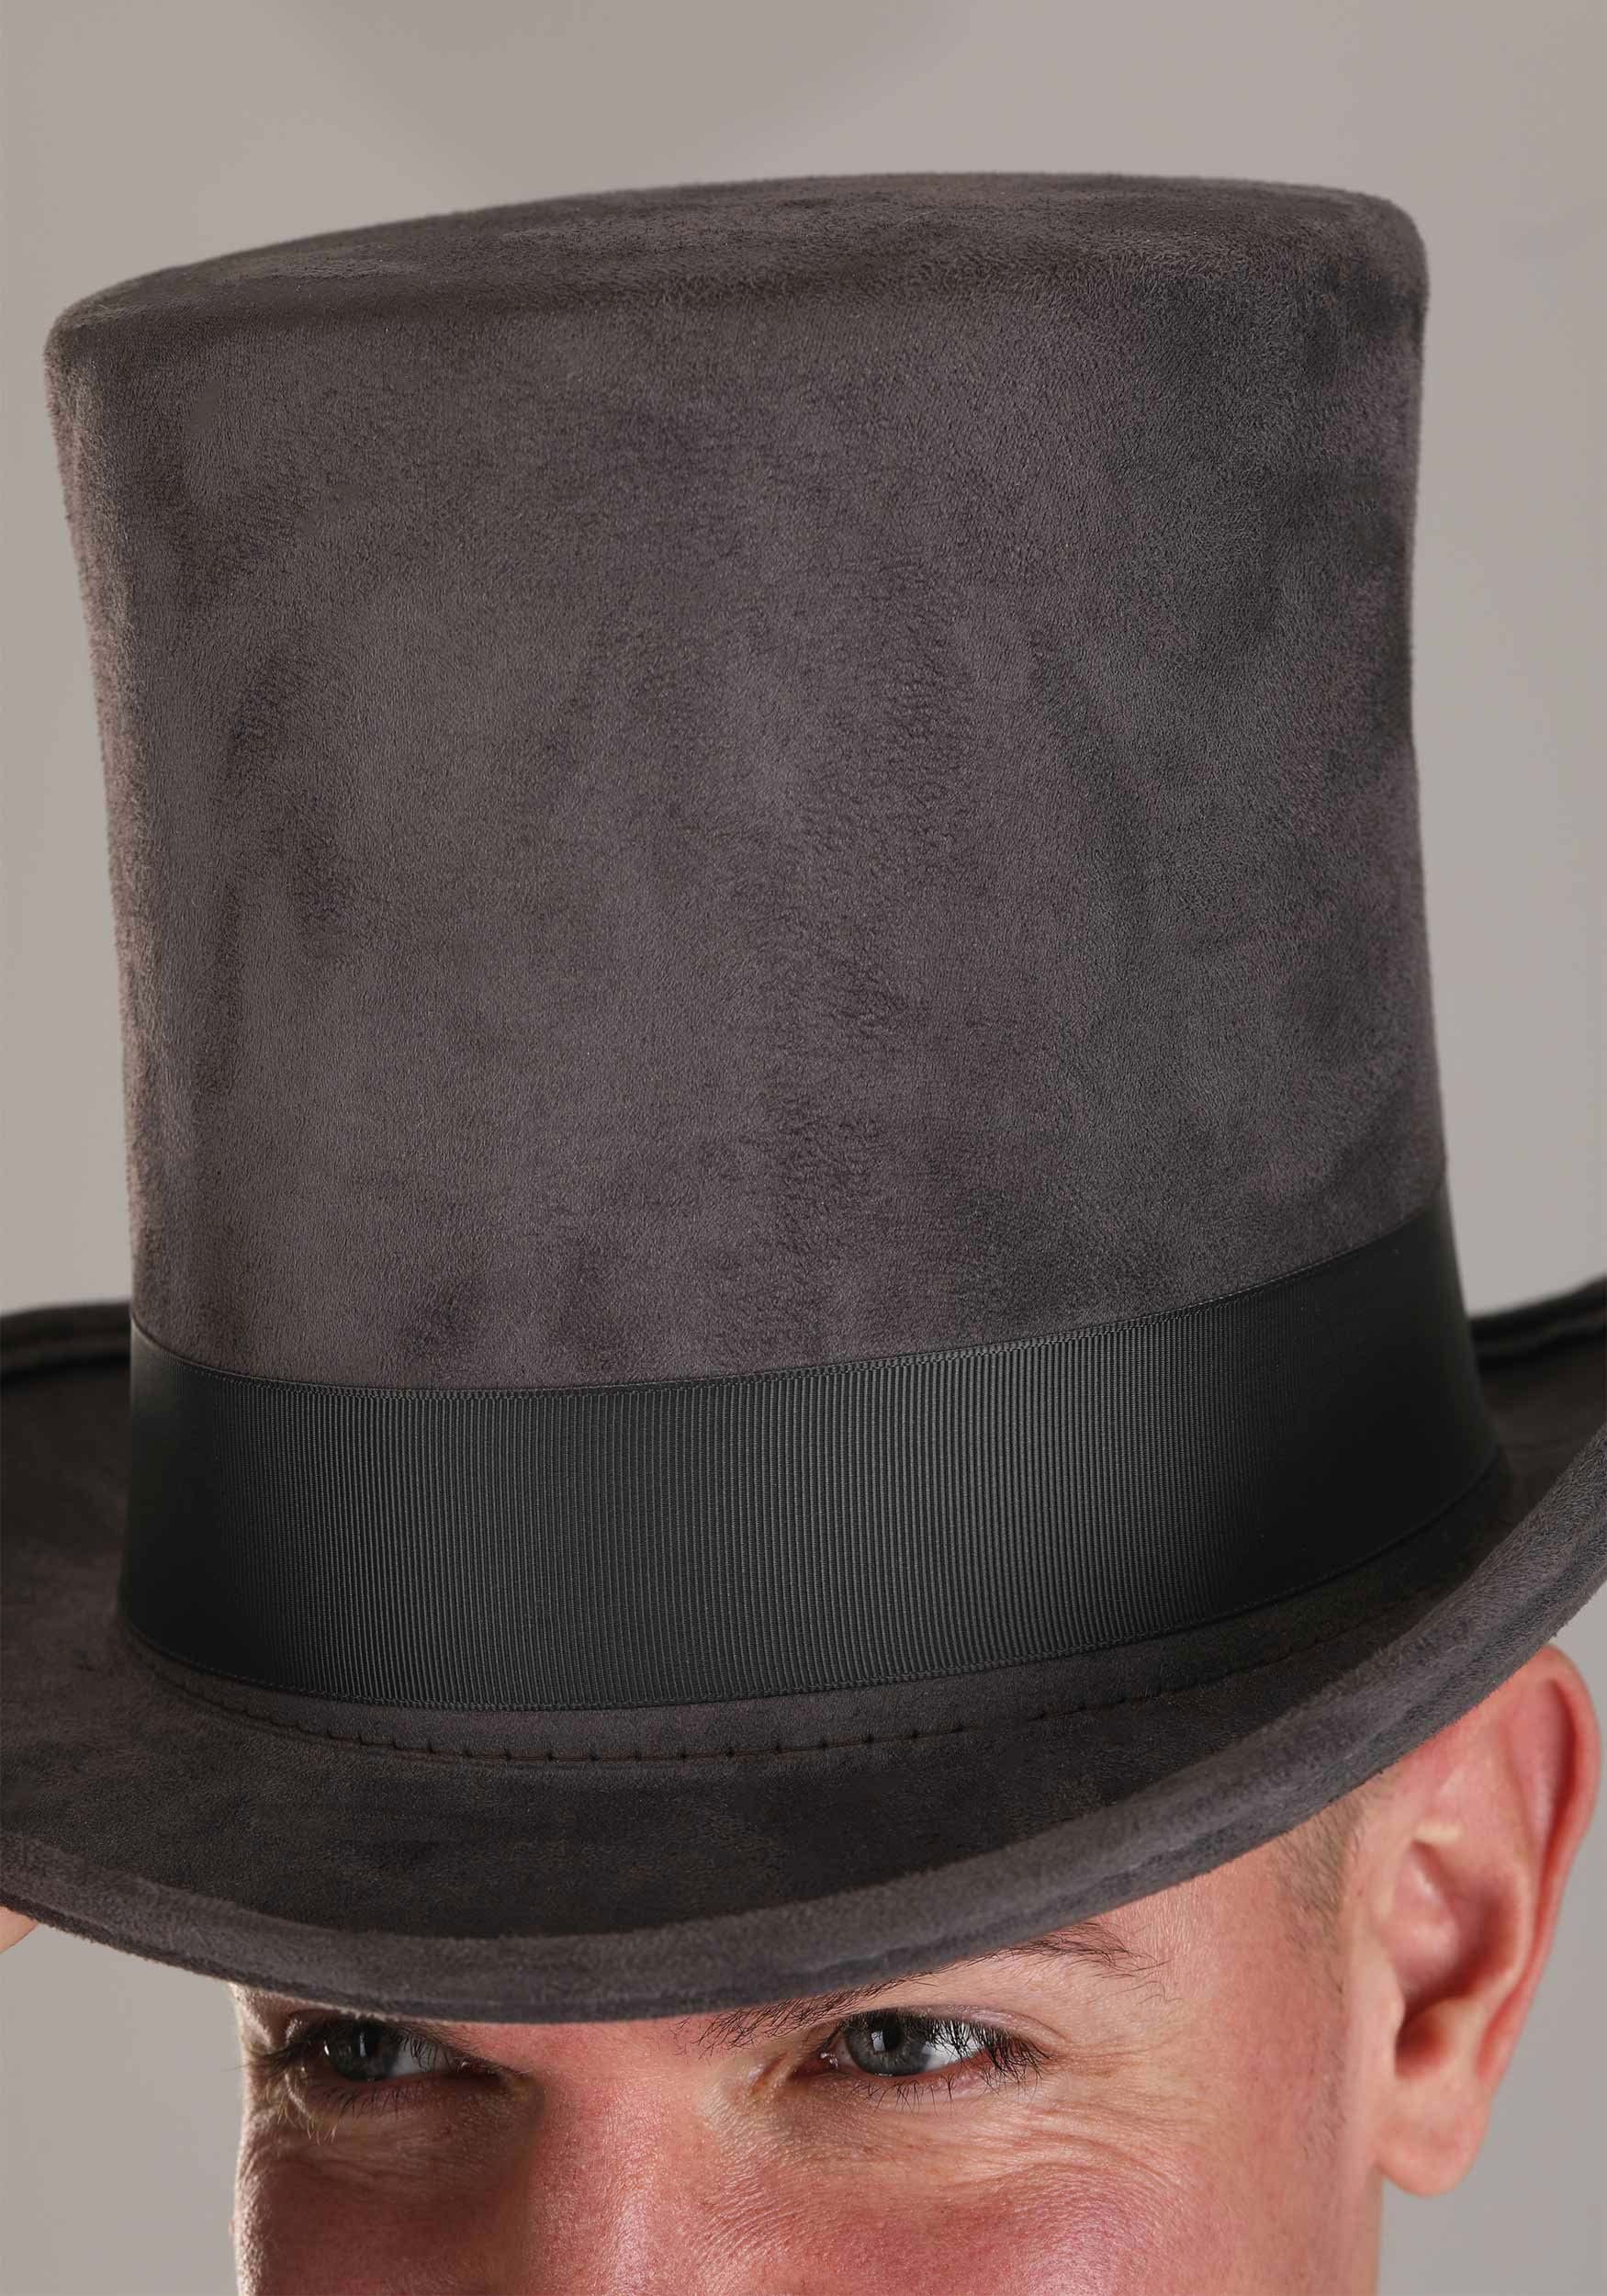 Grey Top Hat Accessory